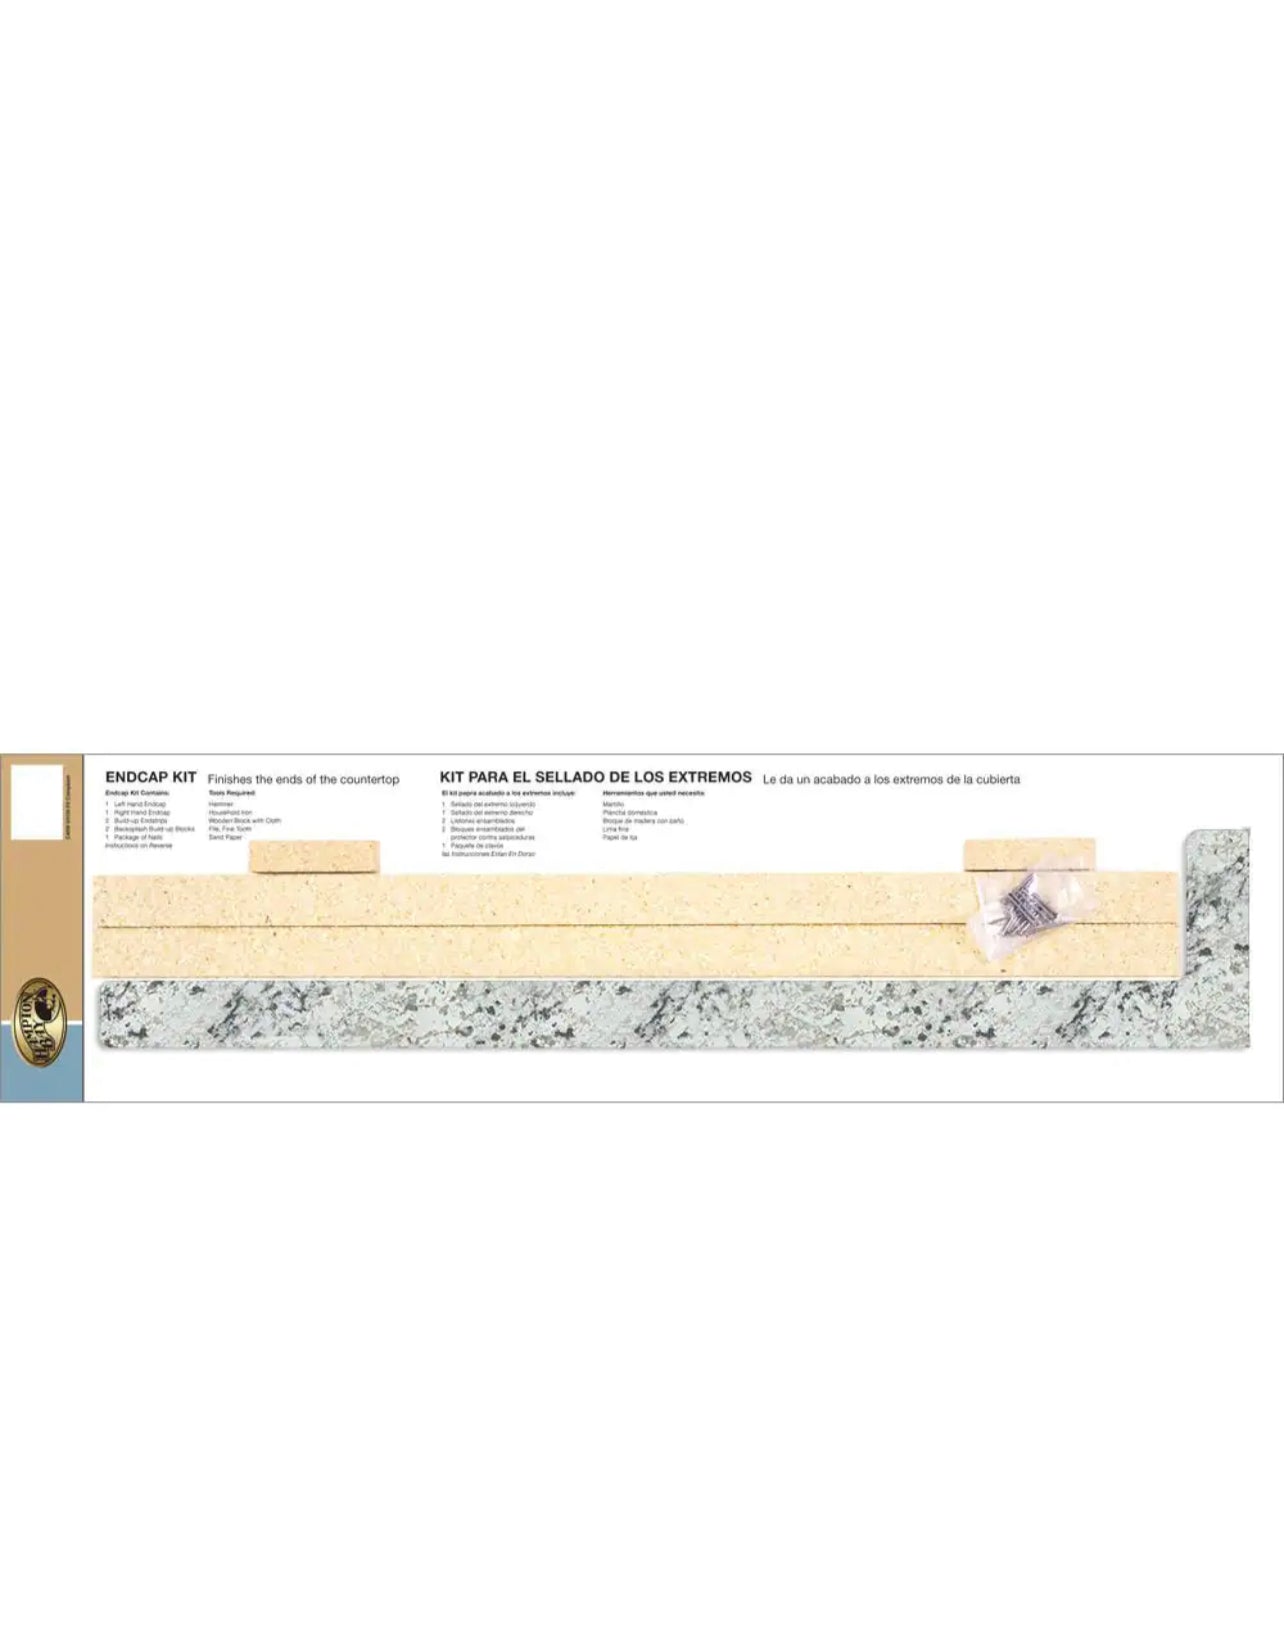 Hampton Bay Laminate Endcap Kit for Countertop with Integrated Backsplash in White Ice Granite Etchings Damaged Box